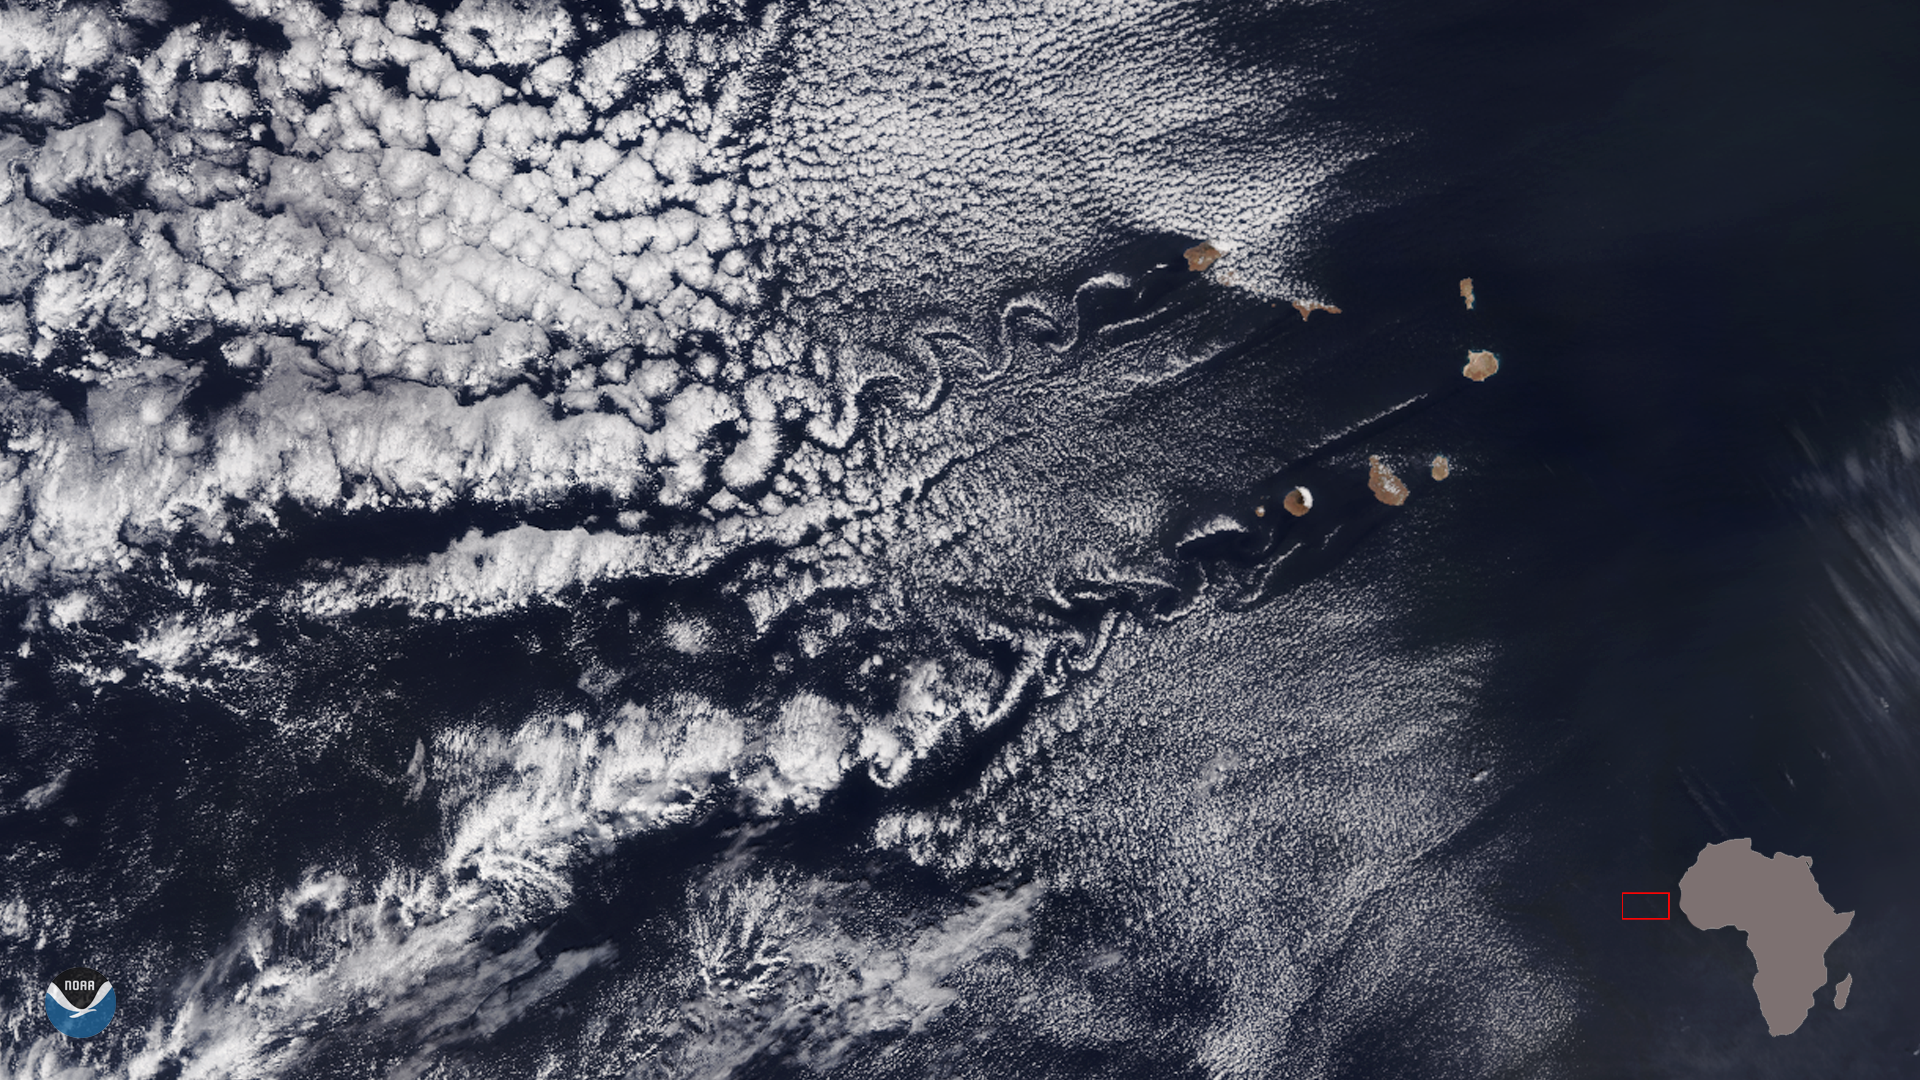 NOAA-20 Sees von Kármán Vortices Near the Cape Verde Islands